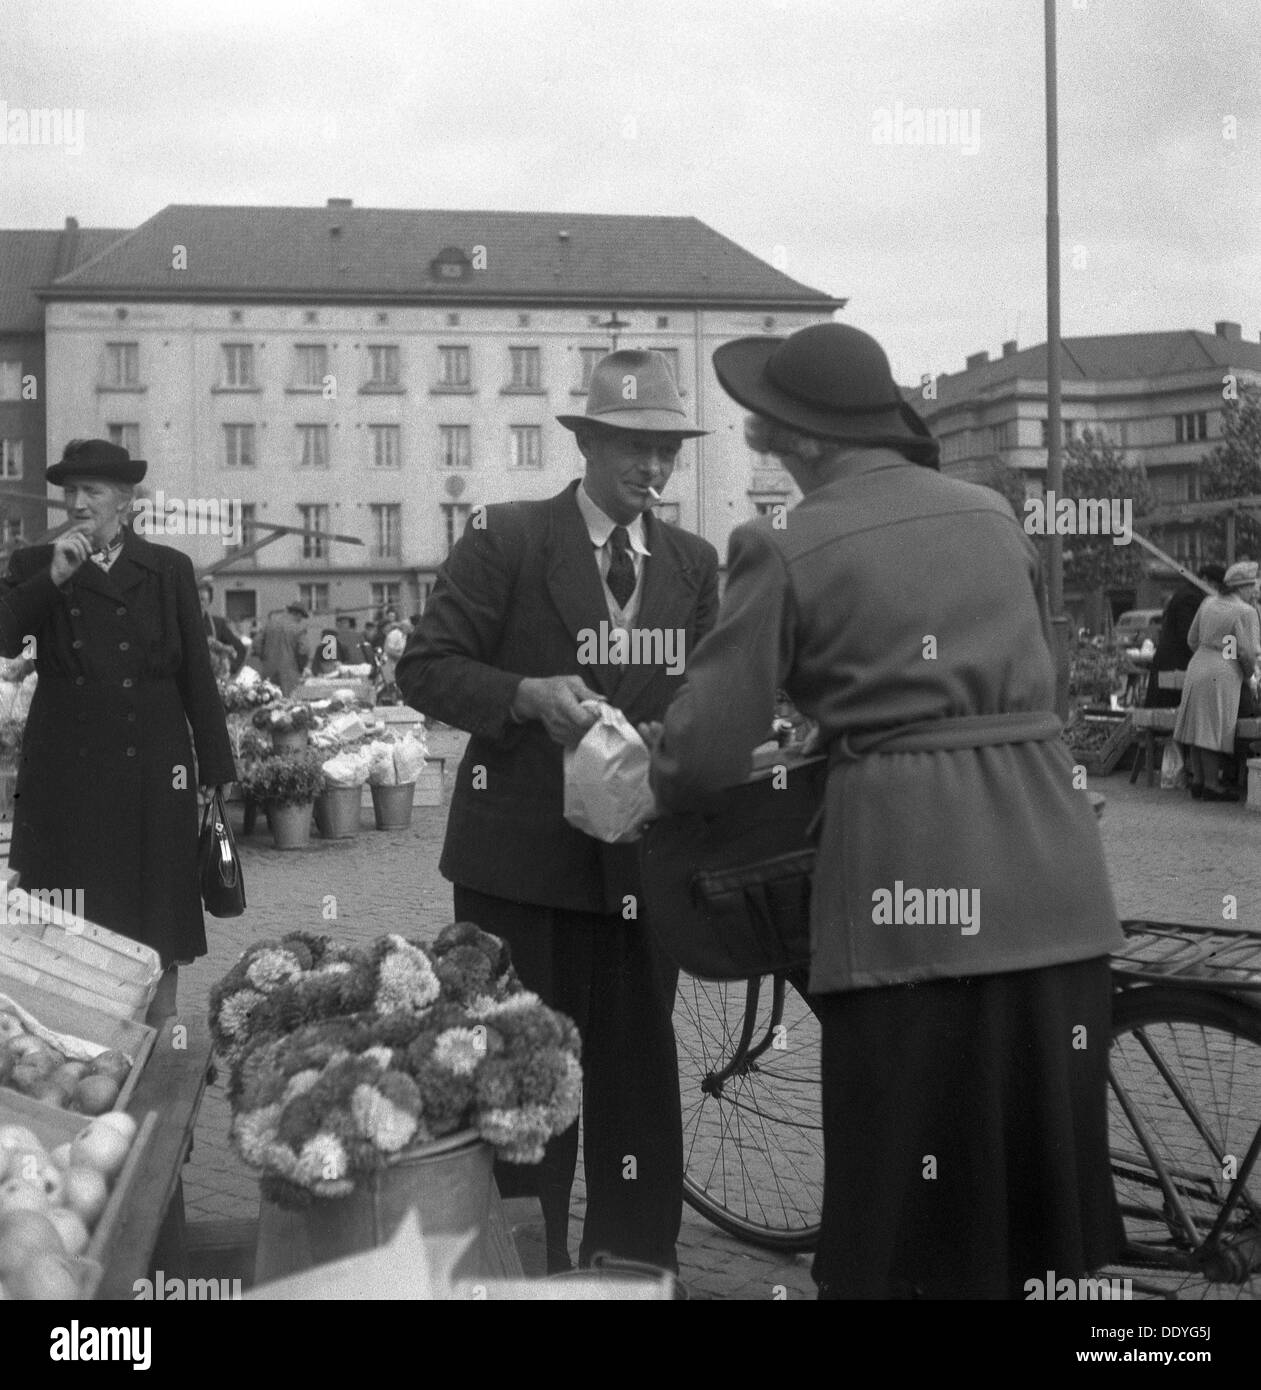 Szene auf dem Markt, Malmö, Schweden, 1947. Artist: Otto Ohm Stockfoto